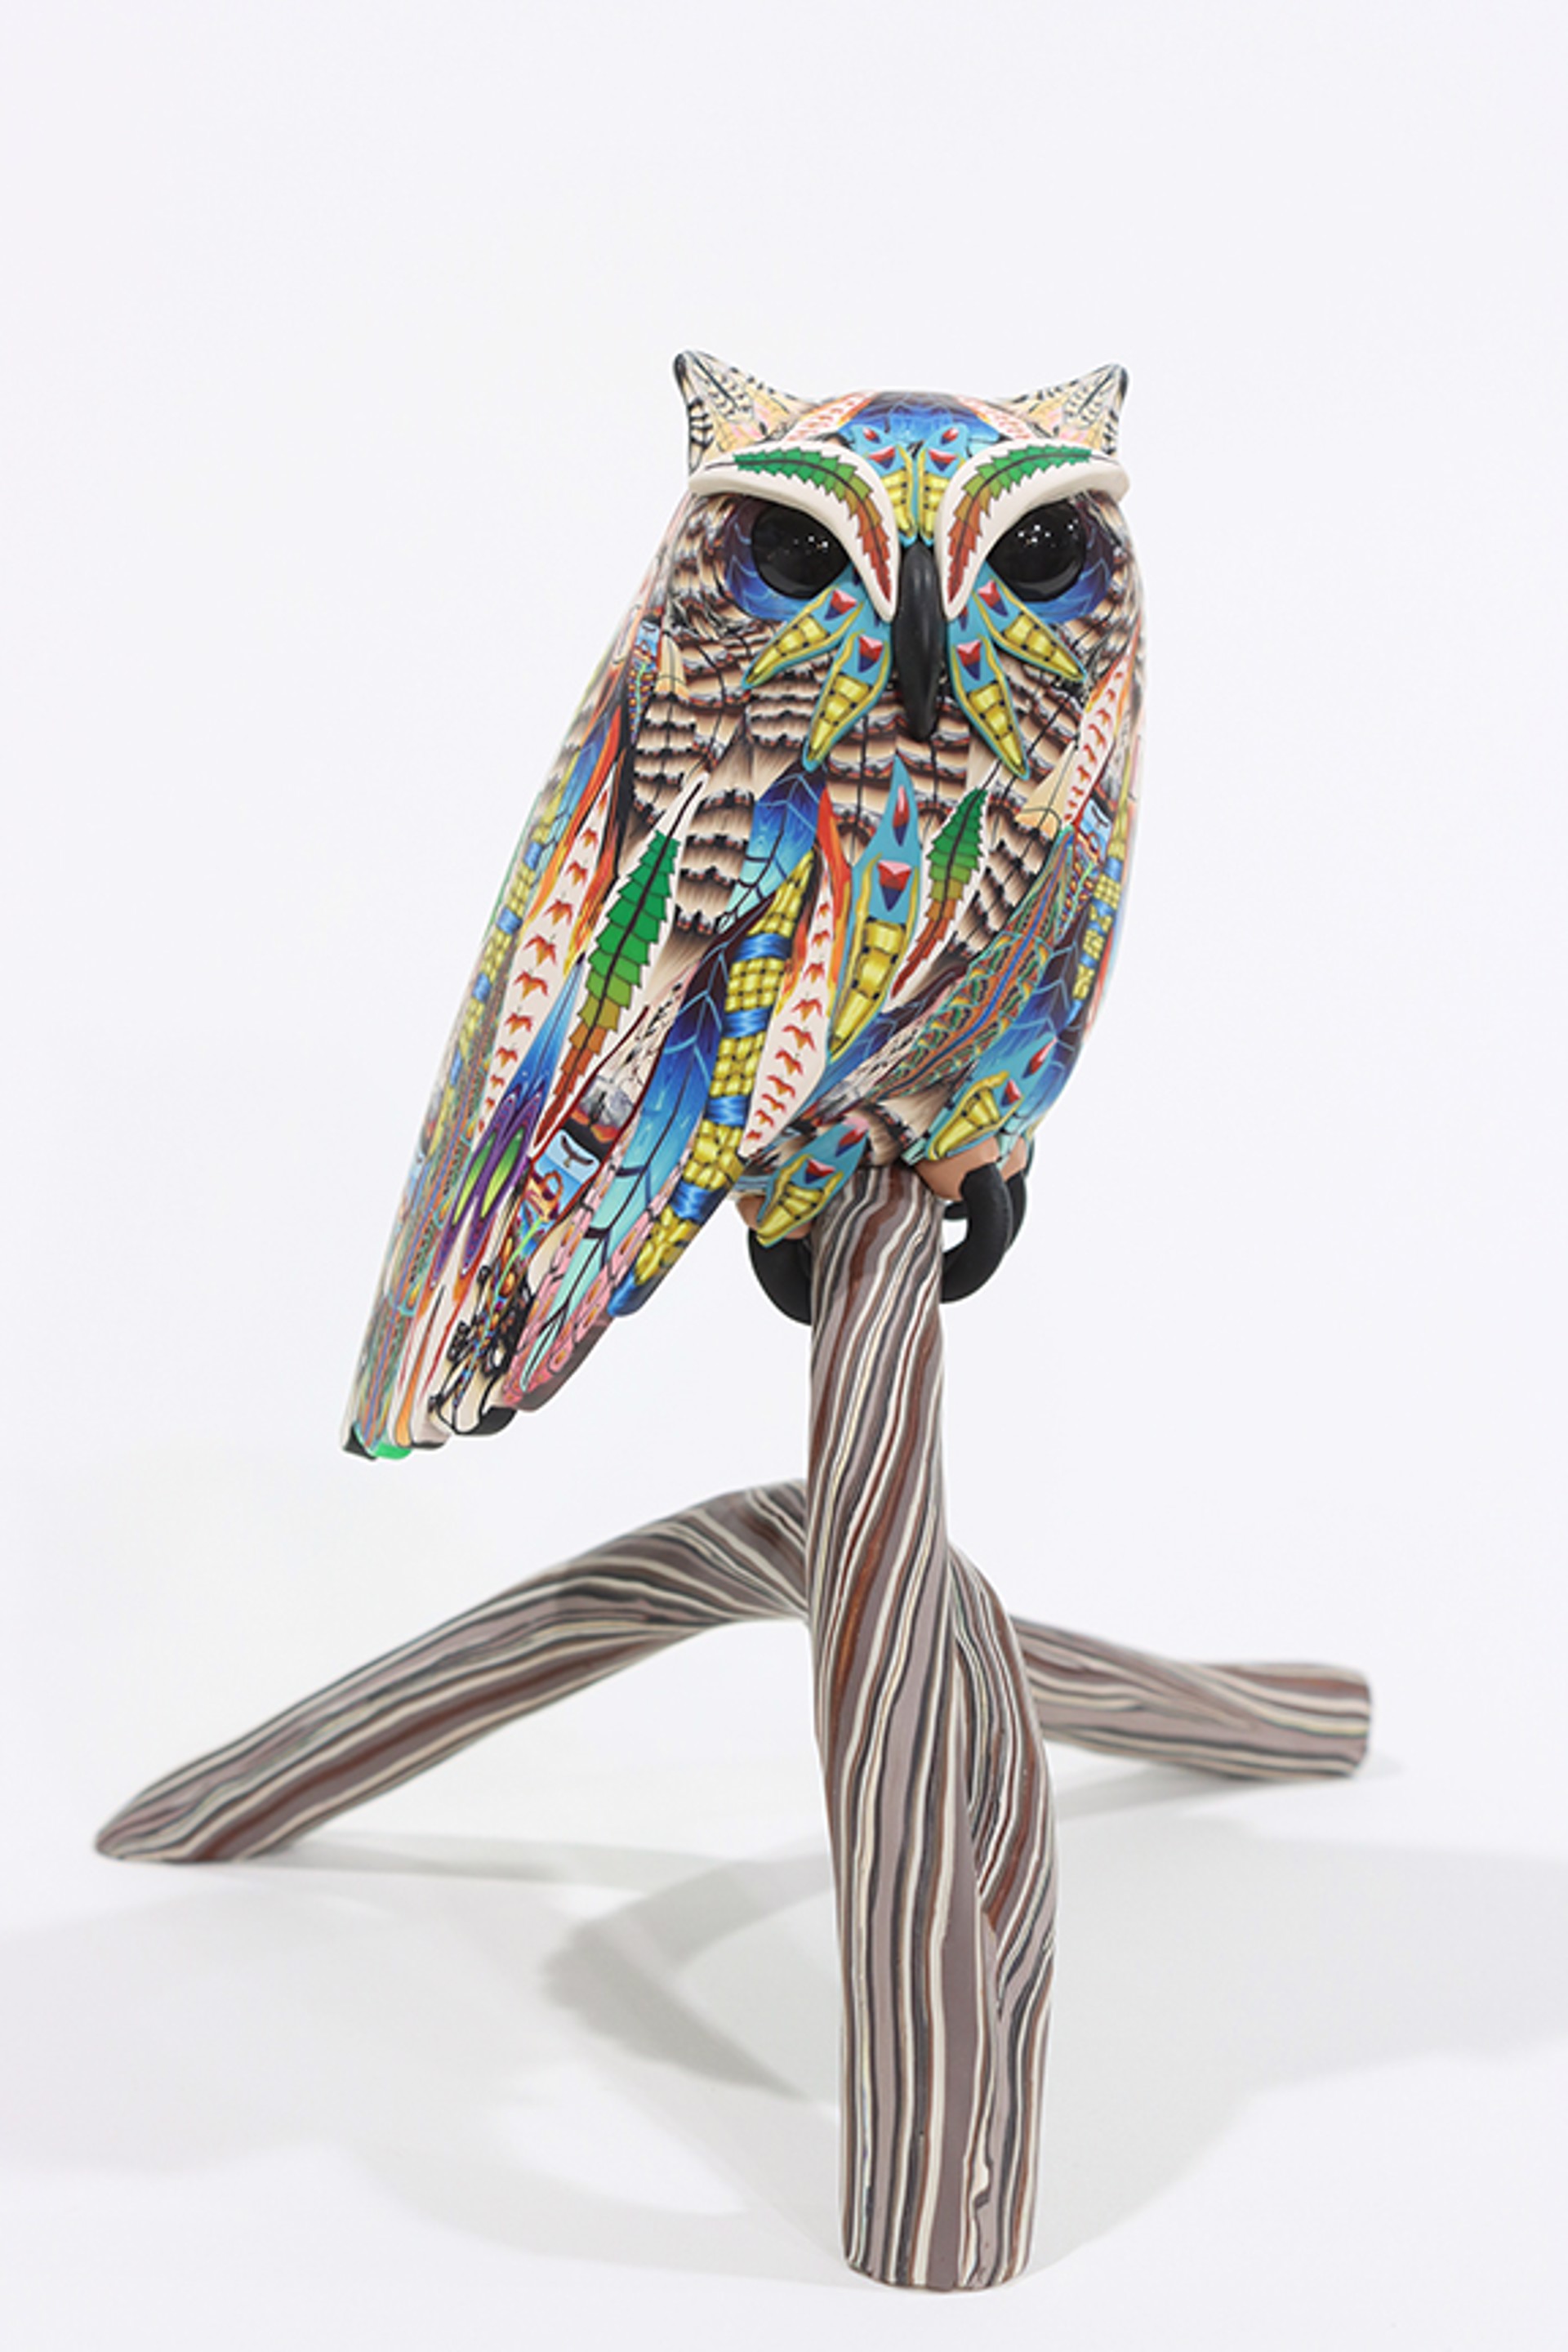 Small Owl by Adam Thomas Rees